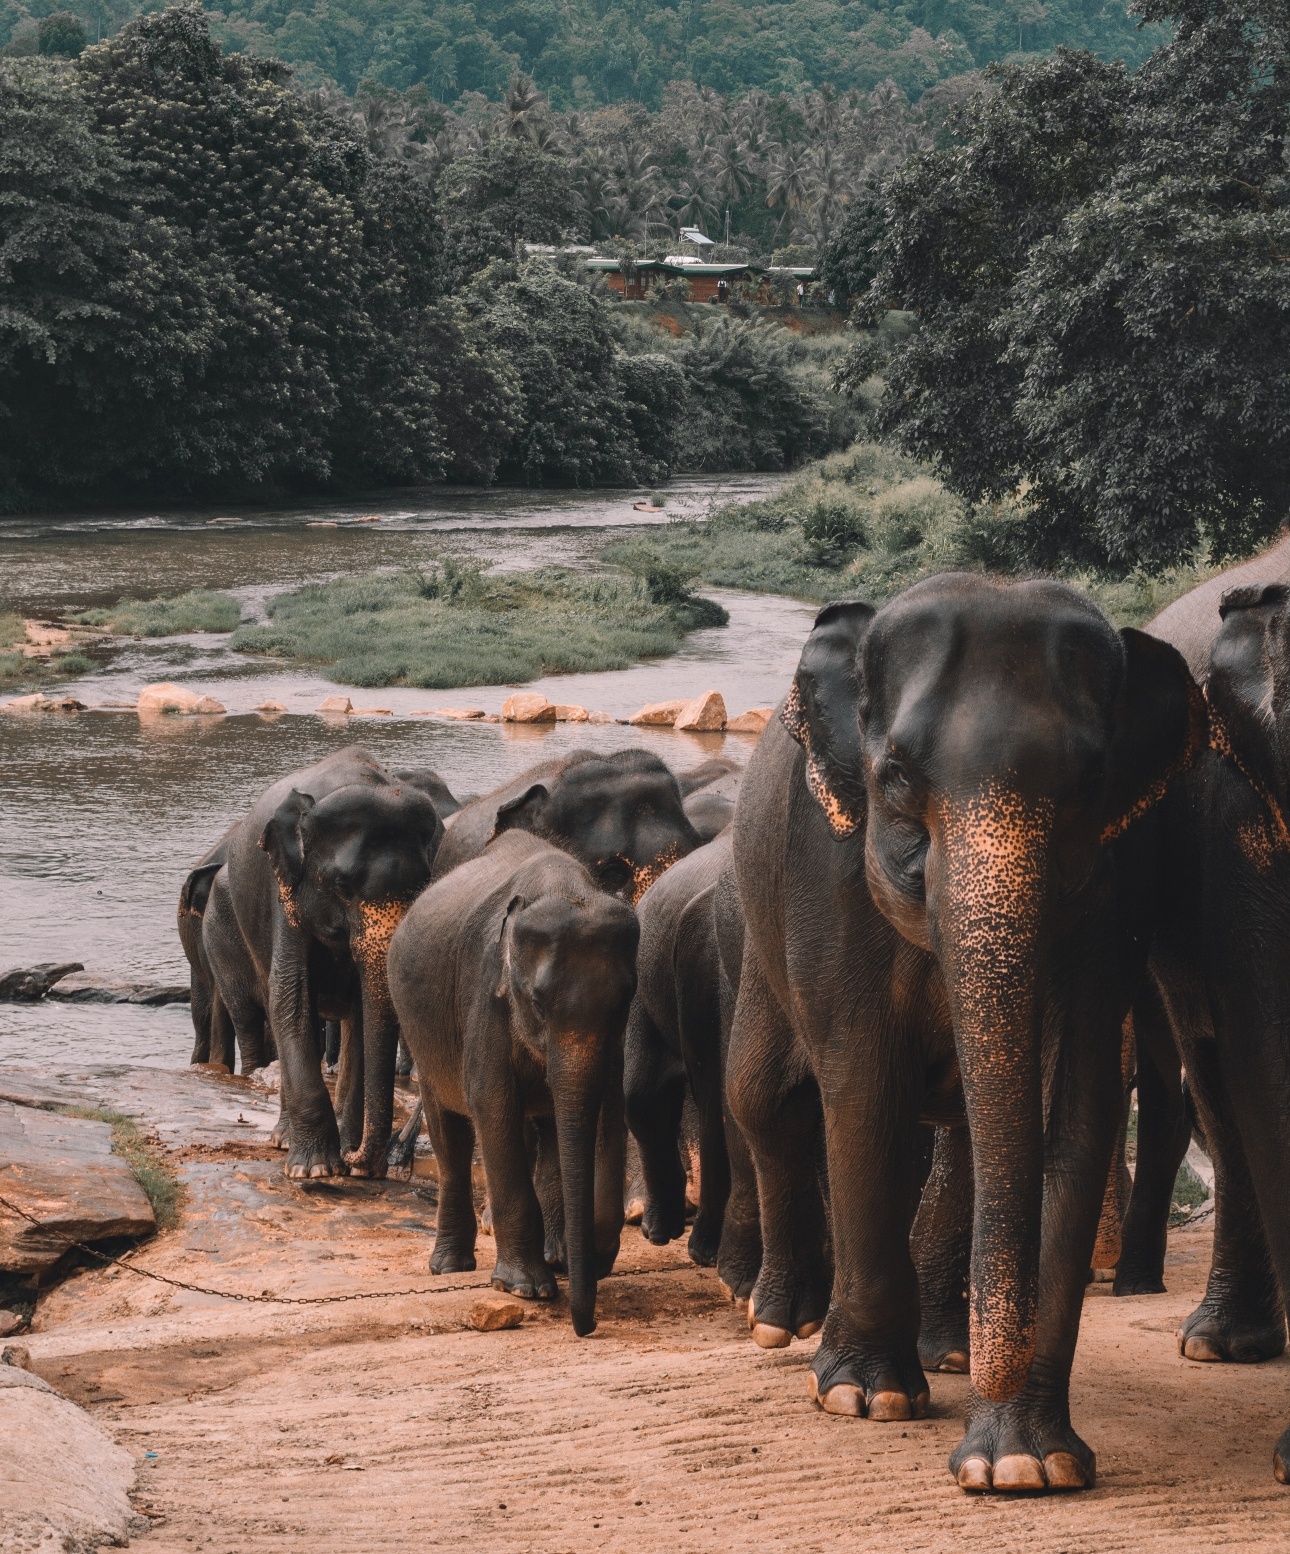 elephants walking through the river